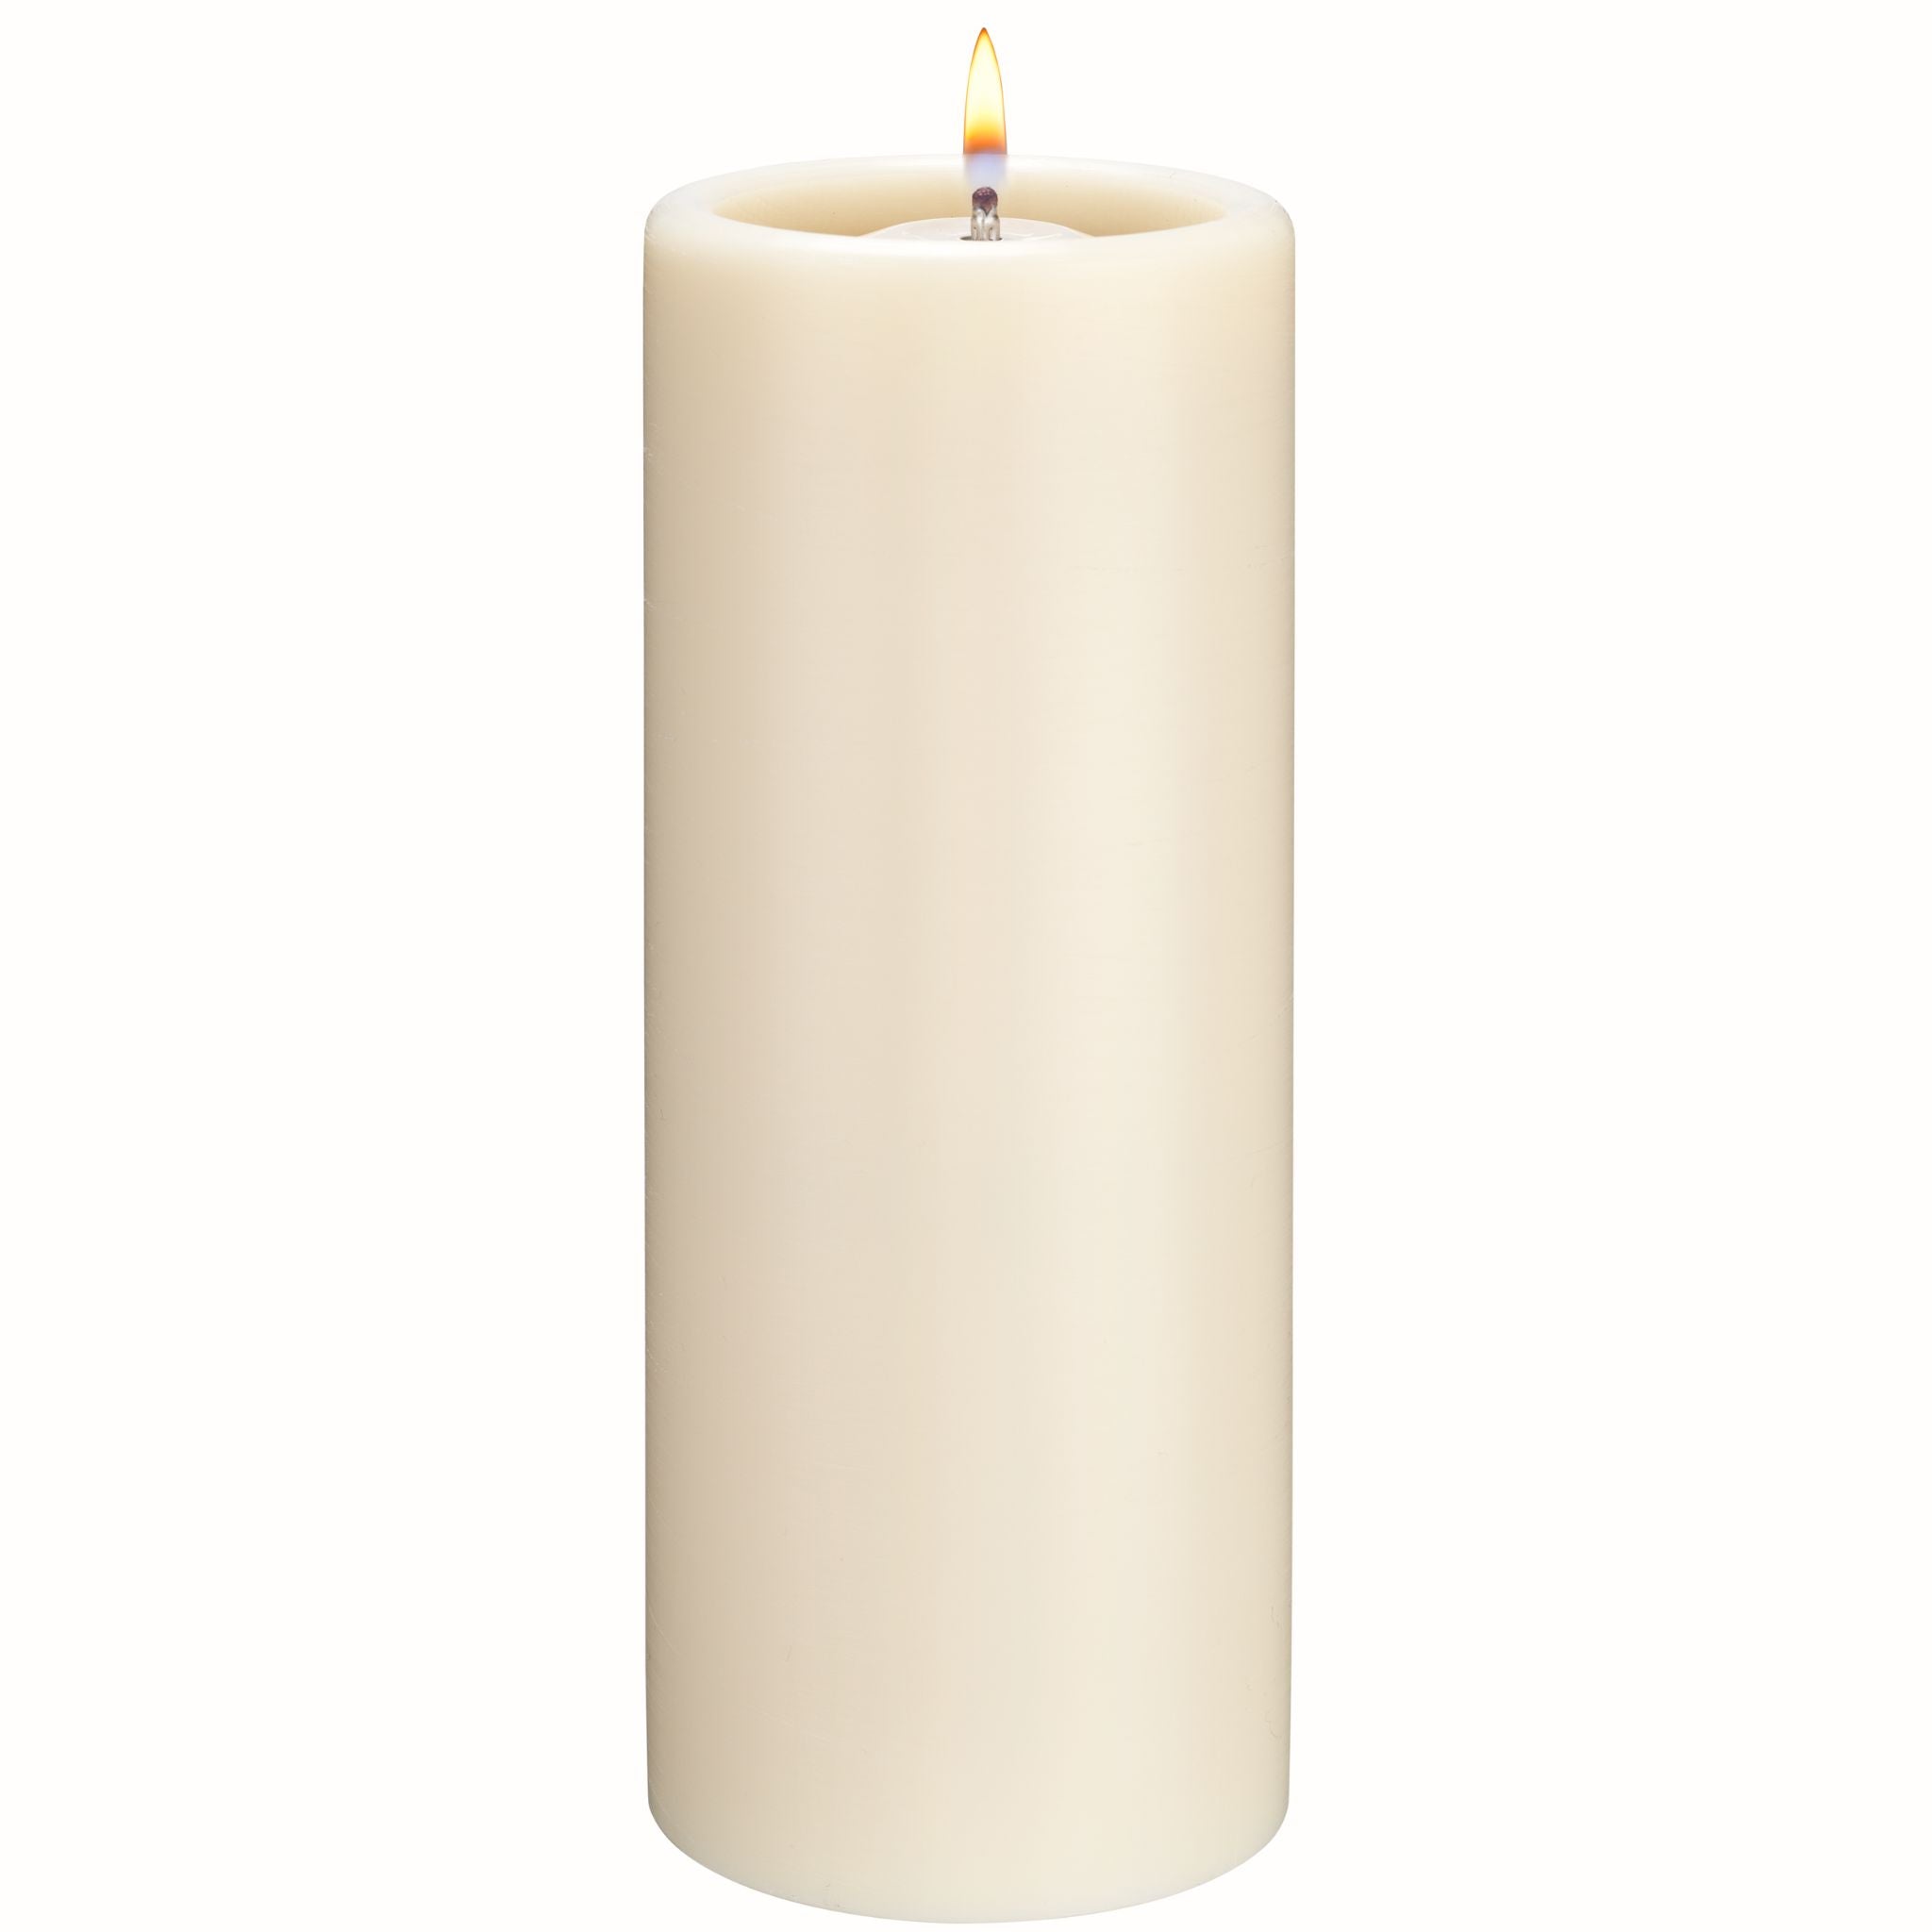 Safety candle 2 pieces for eternal burner 40AL - 0